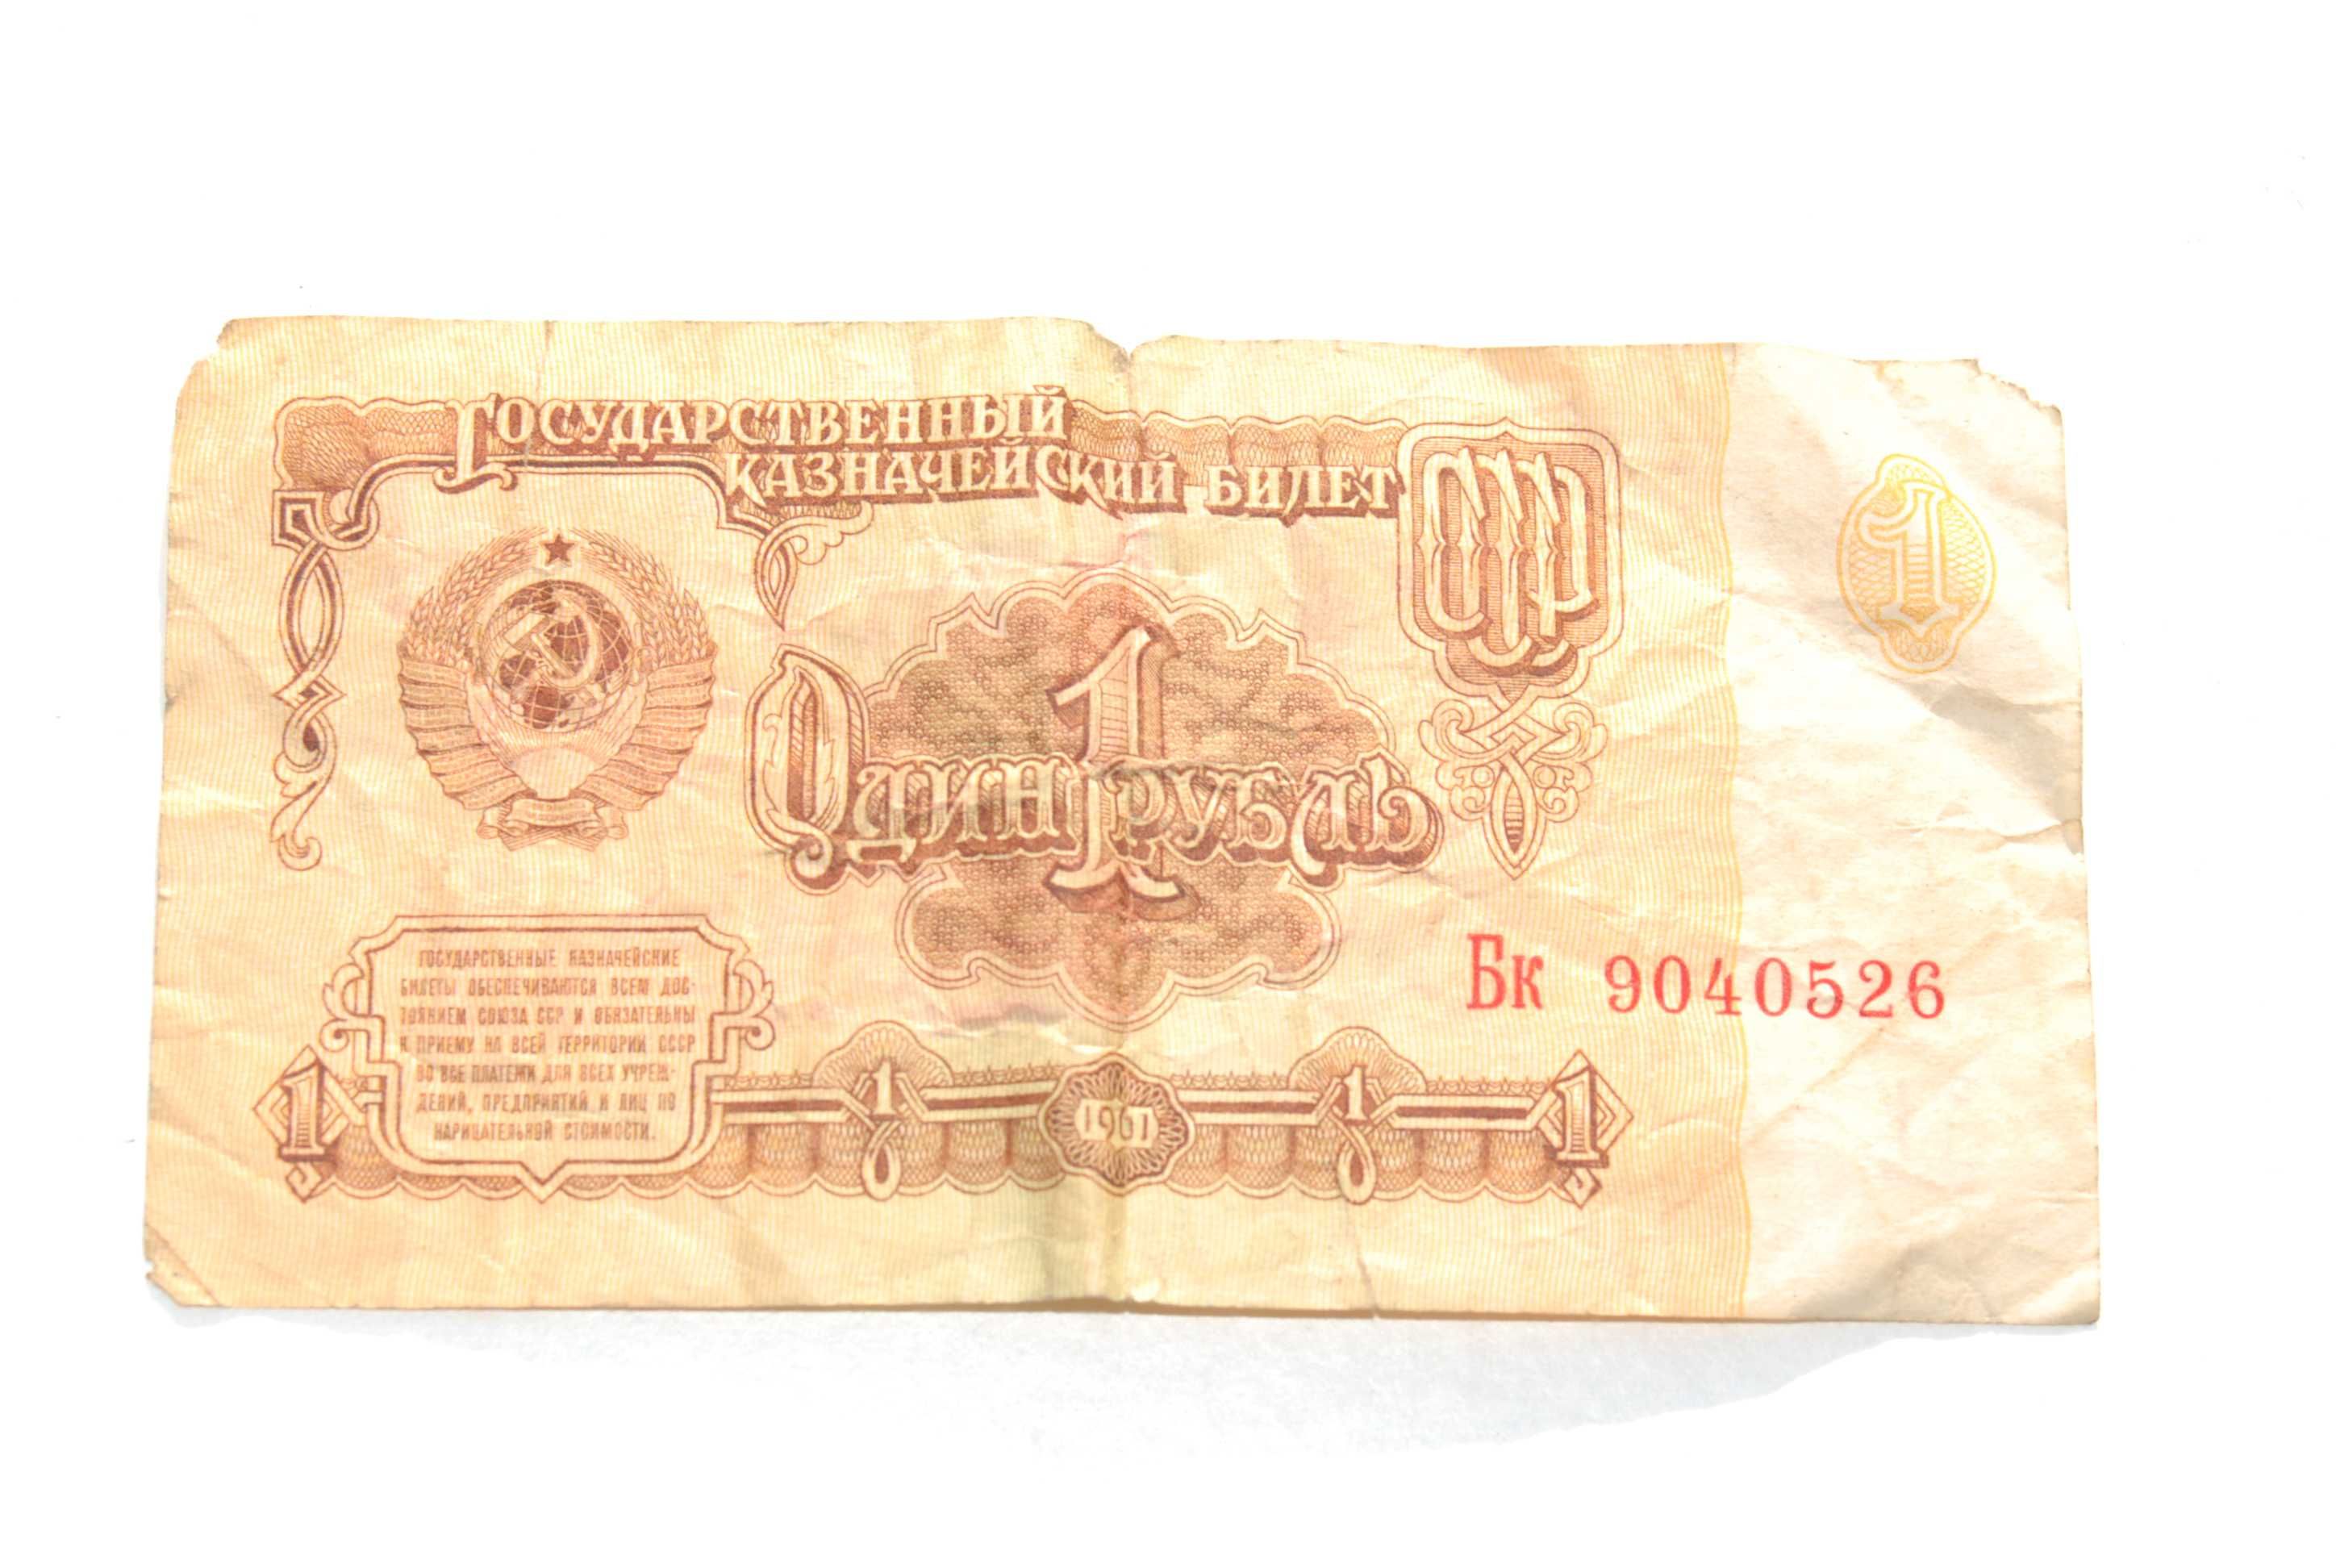 Stary banknot 1 rubel 1961 antyk unikat rzadki